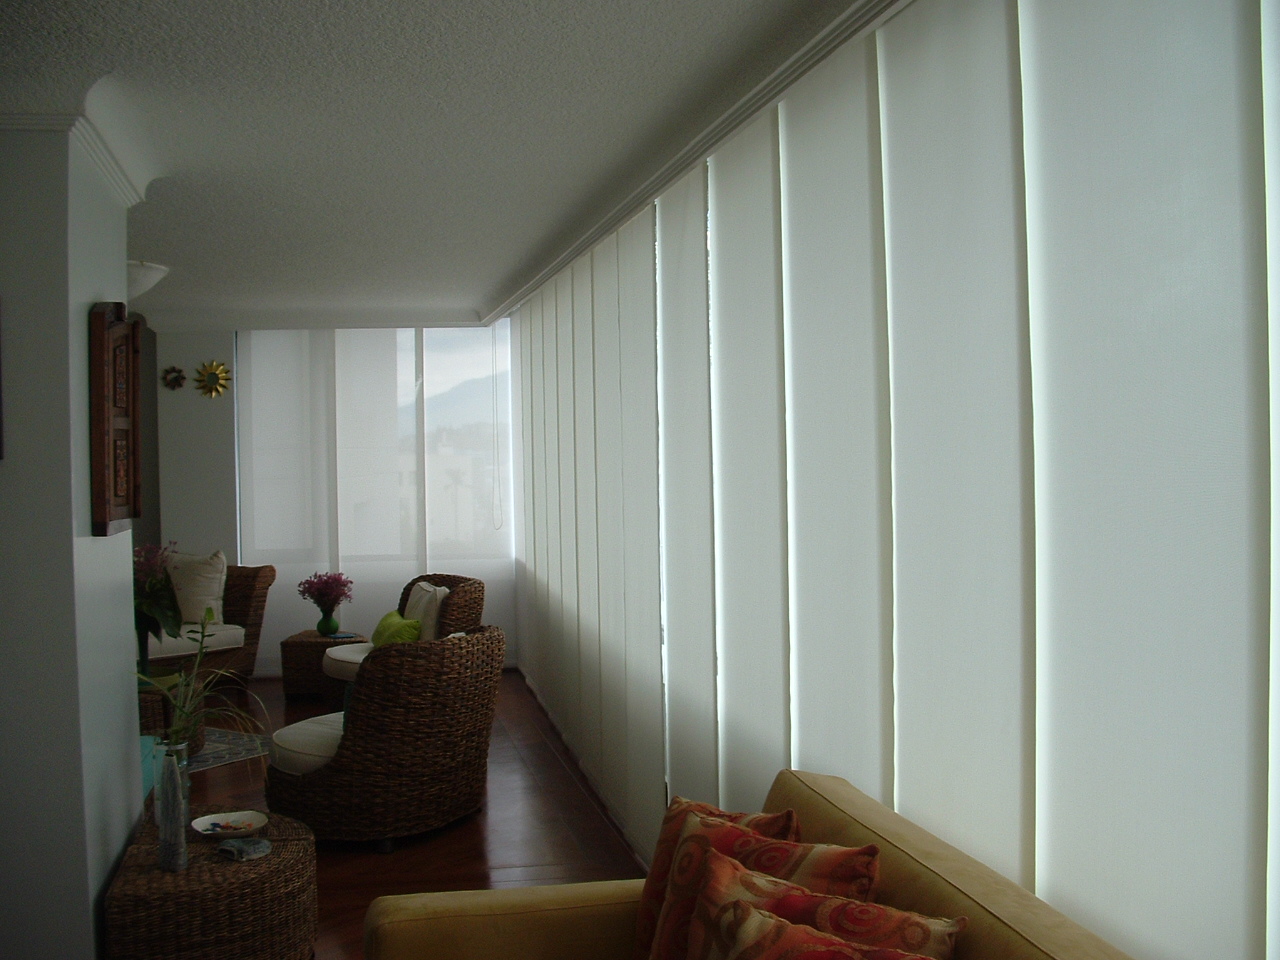 Especial cortinas: Paneles Japoneses !